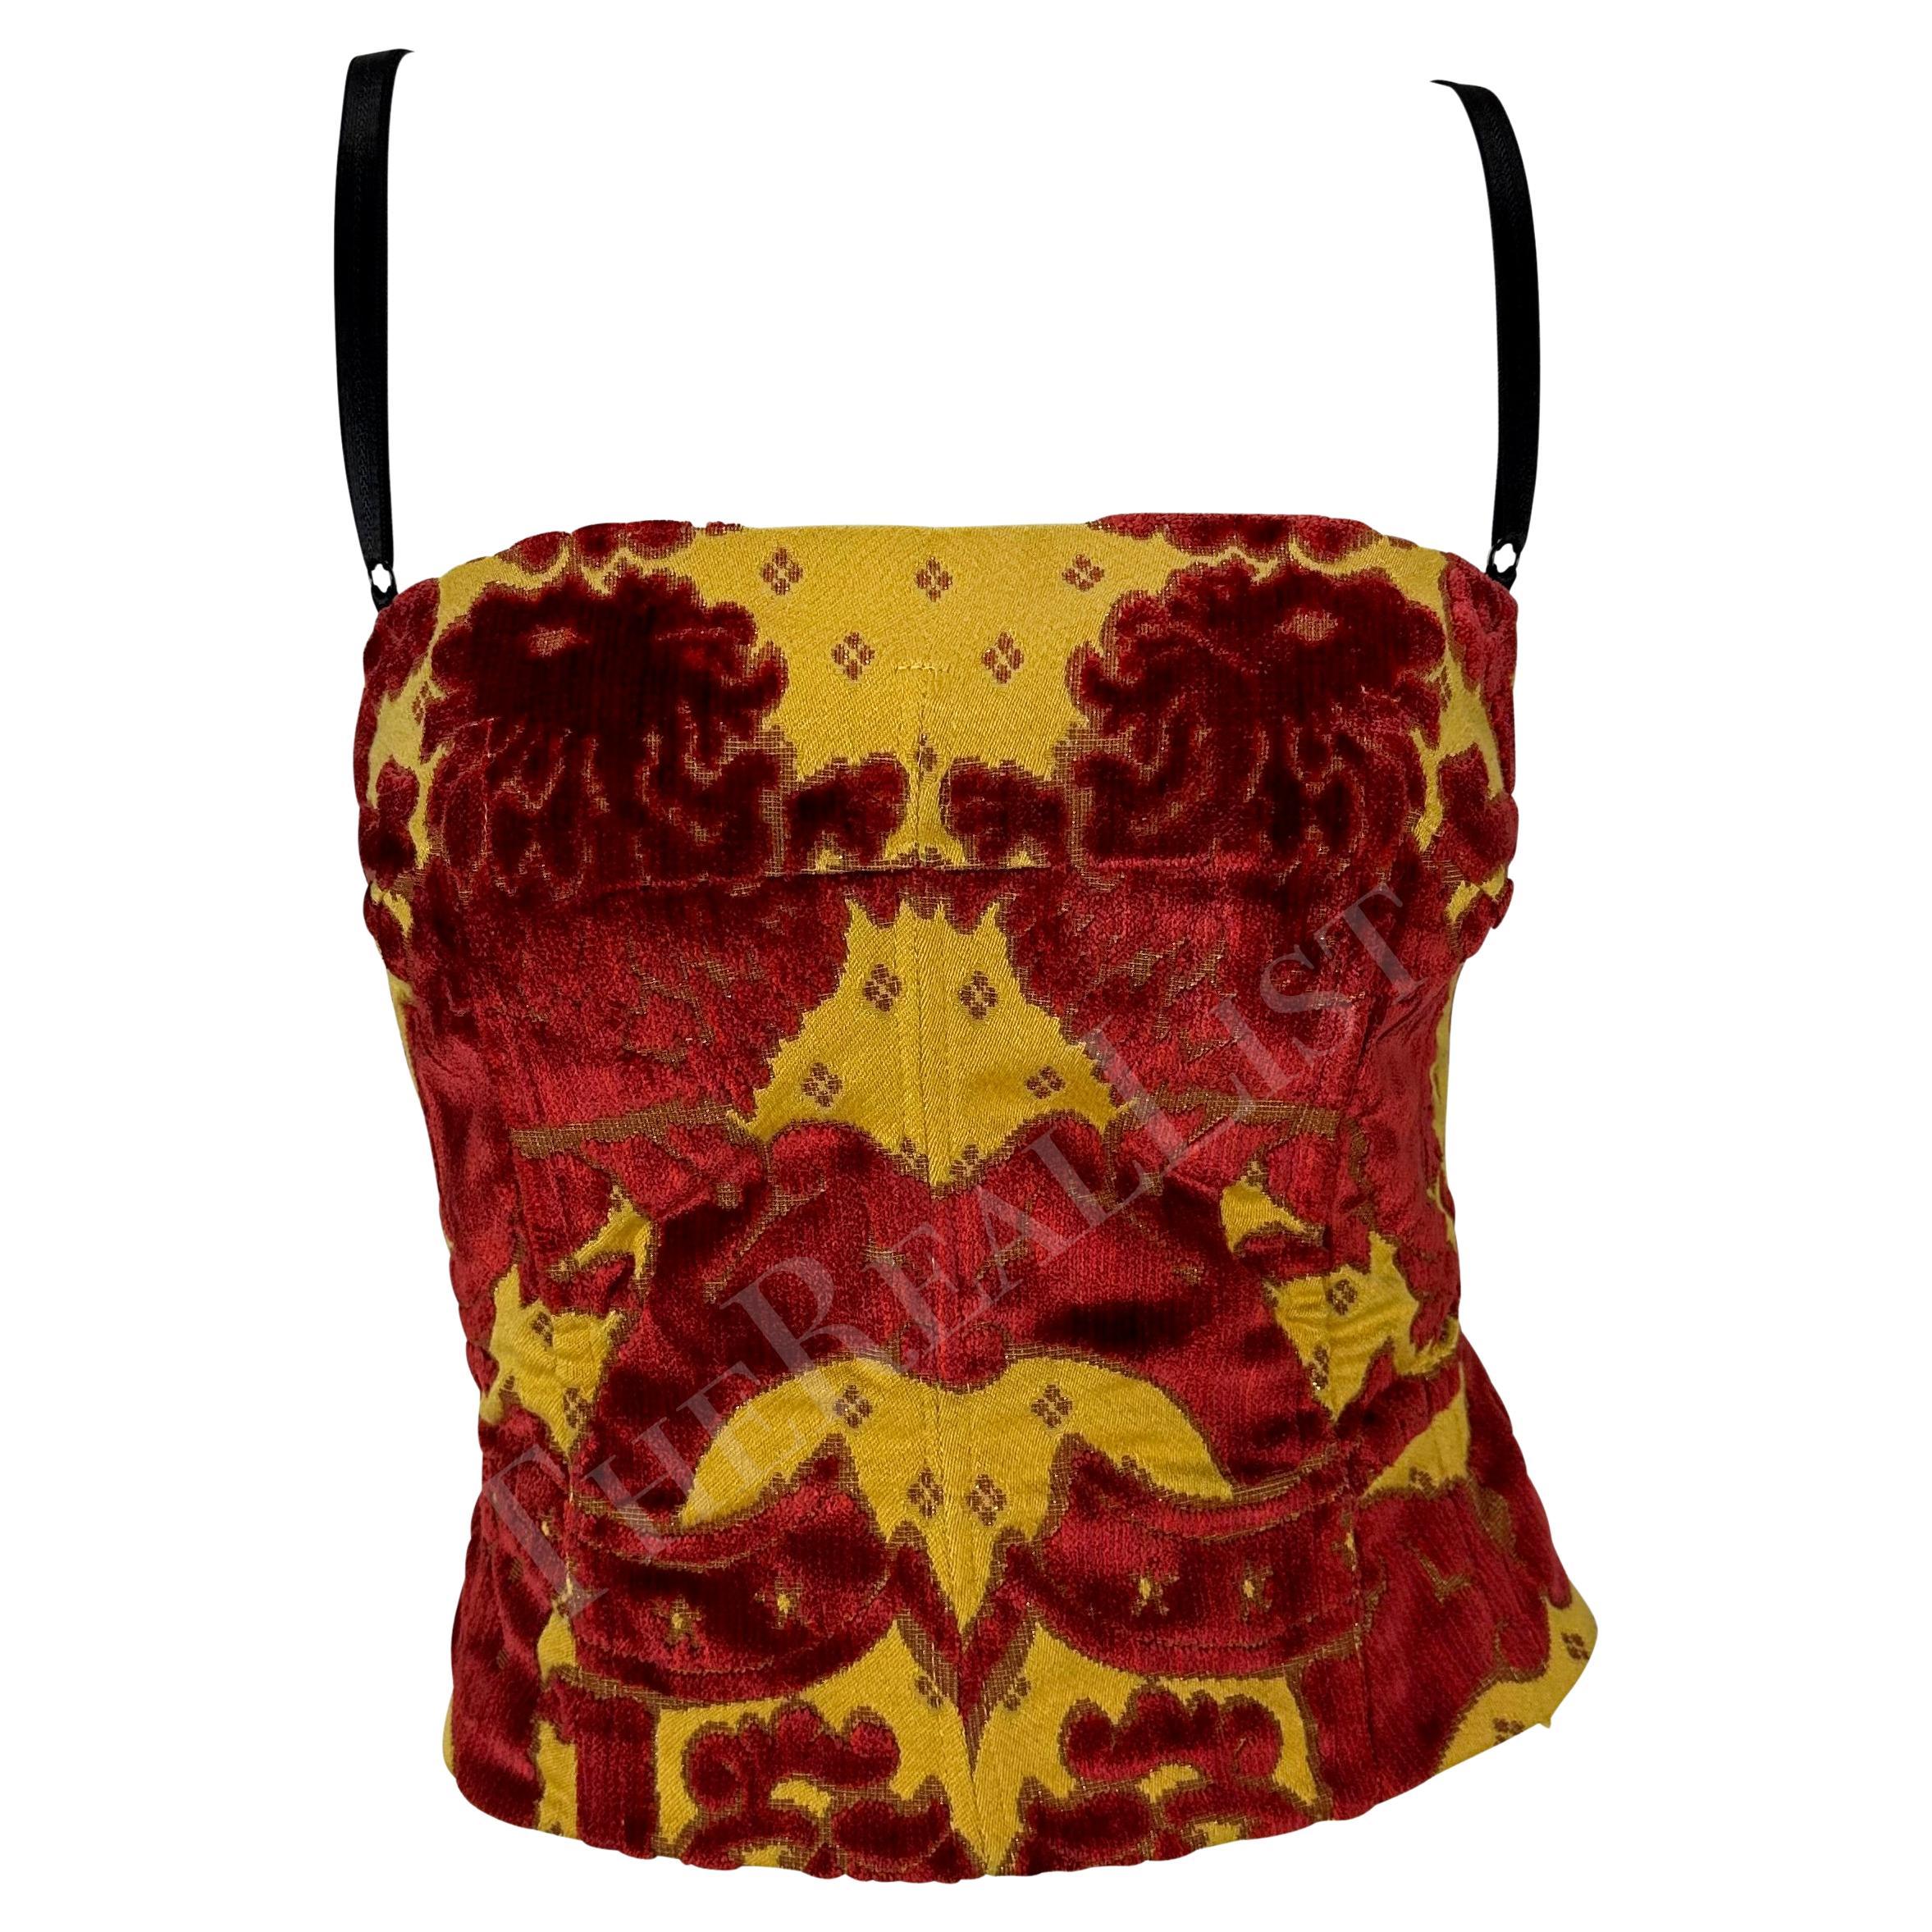 S/S 2000 Dolce & Gabbana Runway Ad Red Gold Velvet Tapestry Corset Bustier For Sale